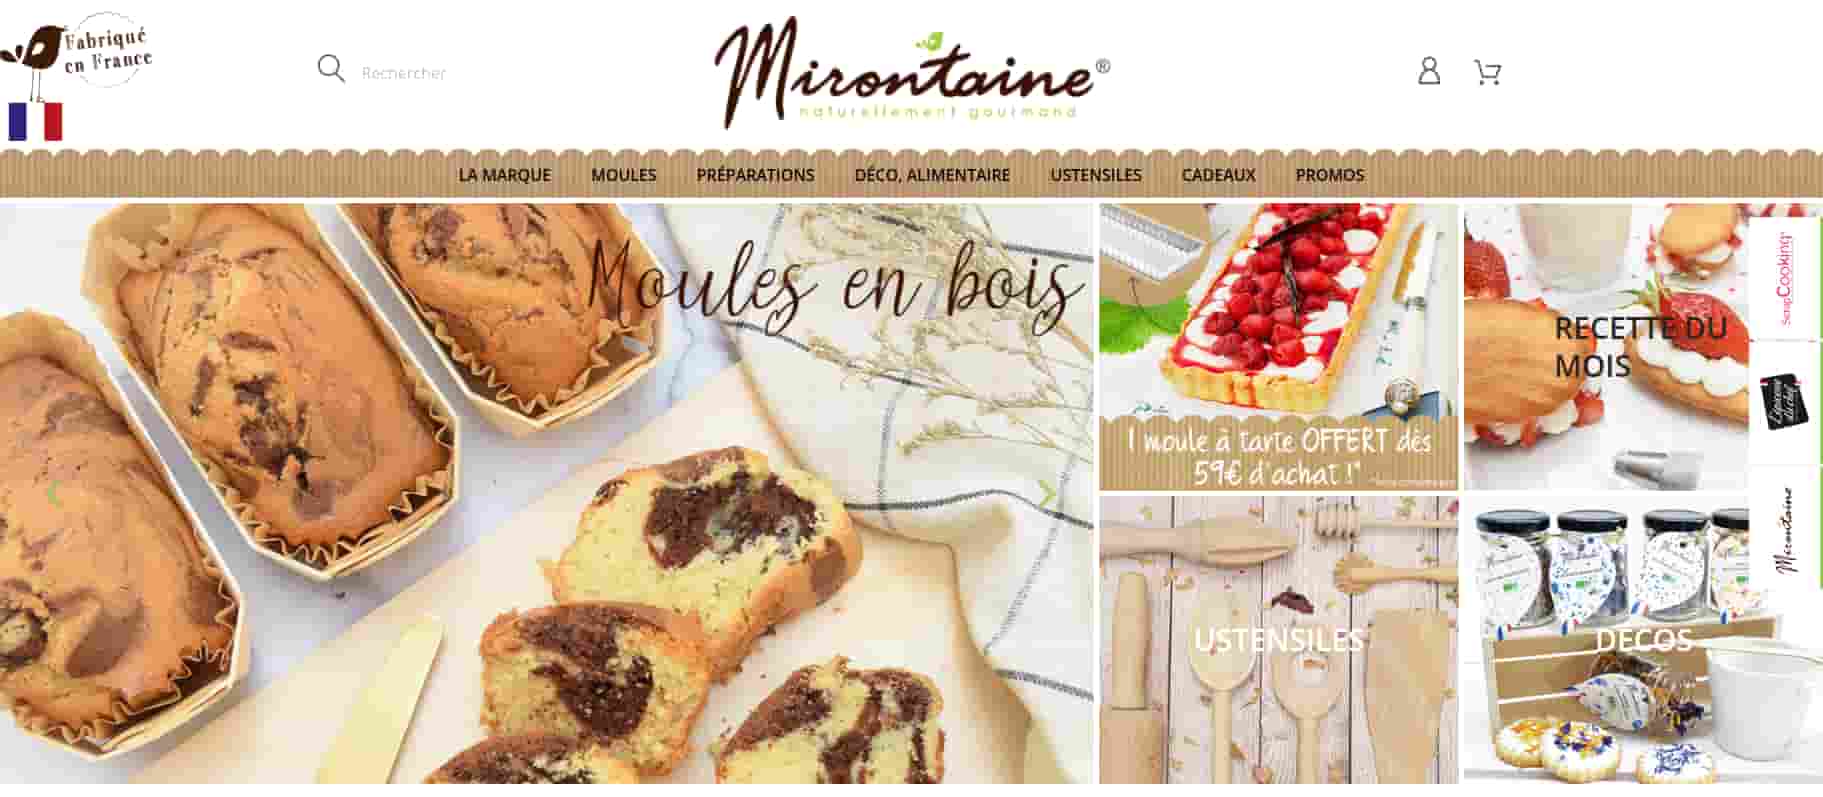 site internet Mirontaine